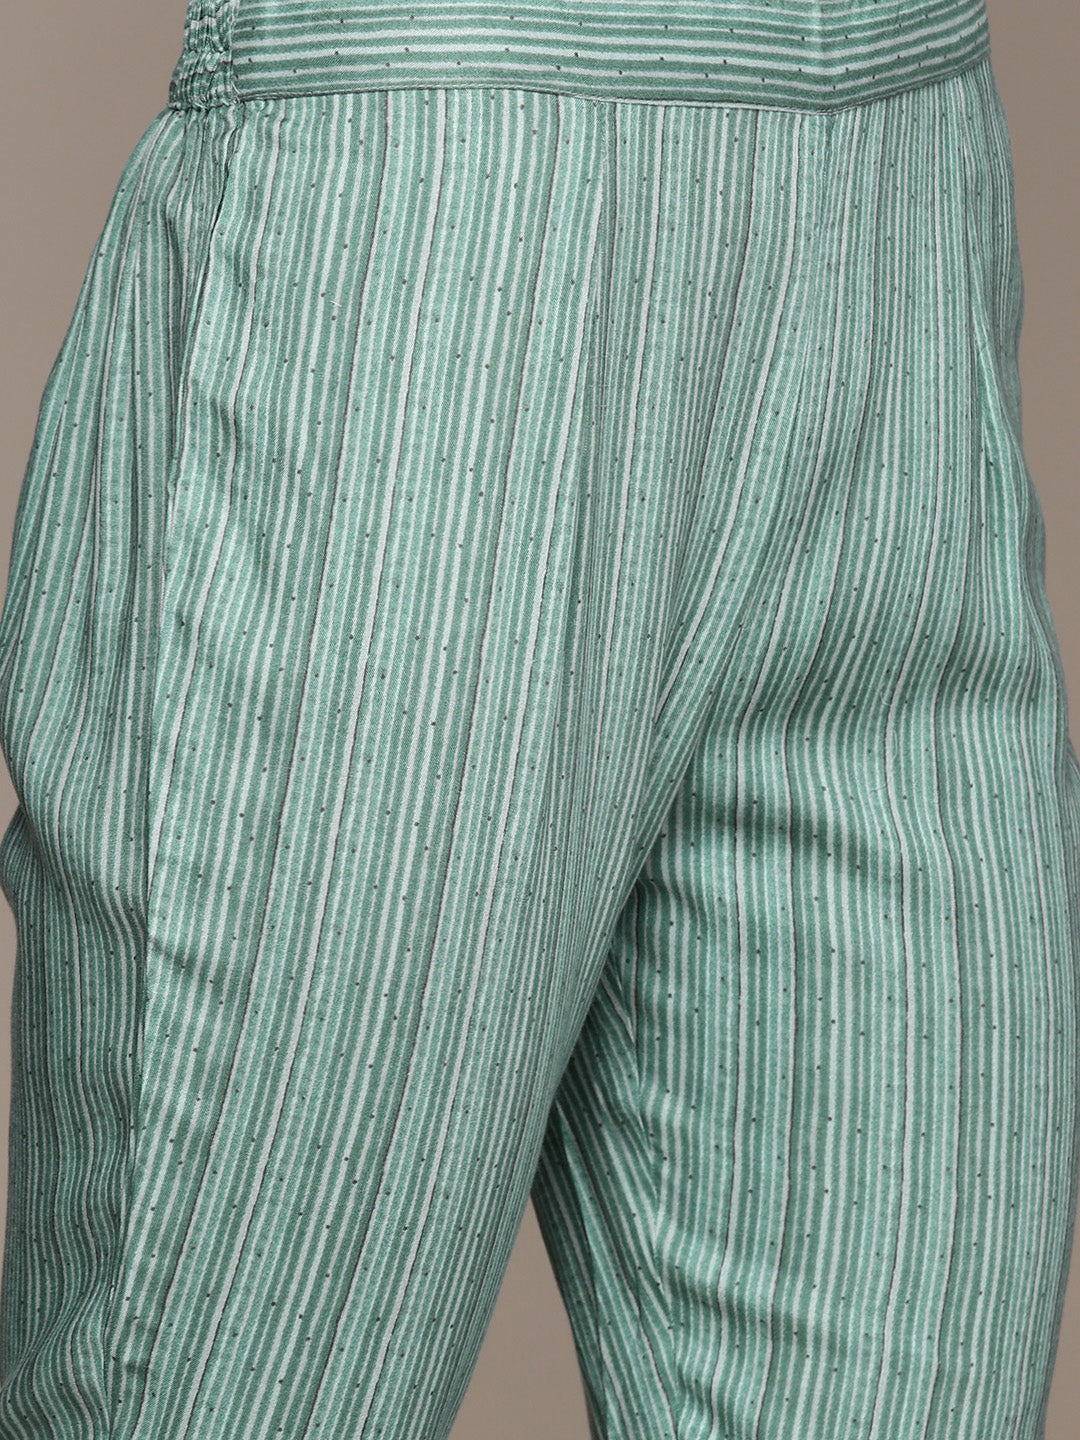 Ishin Women's Green Embellished A-Line Kurta with Trouser & Dupatta